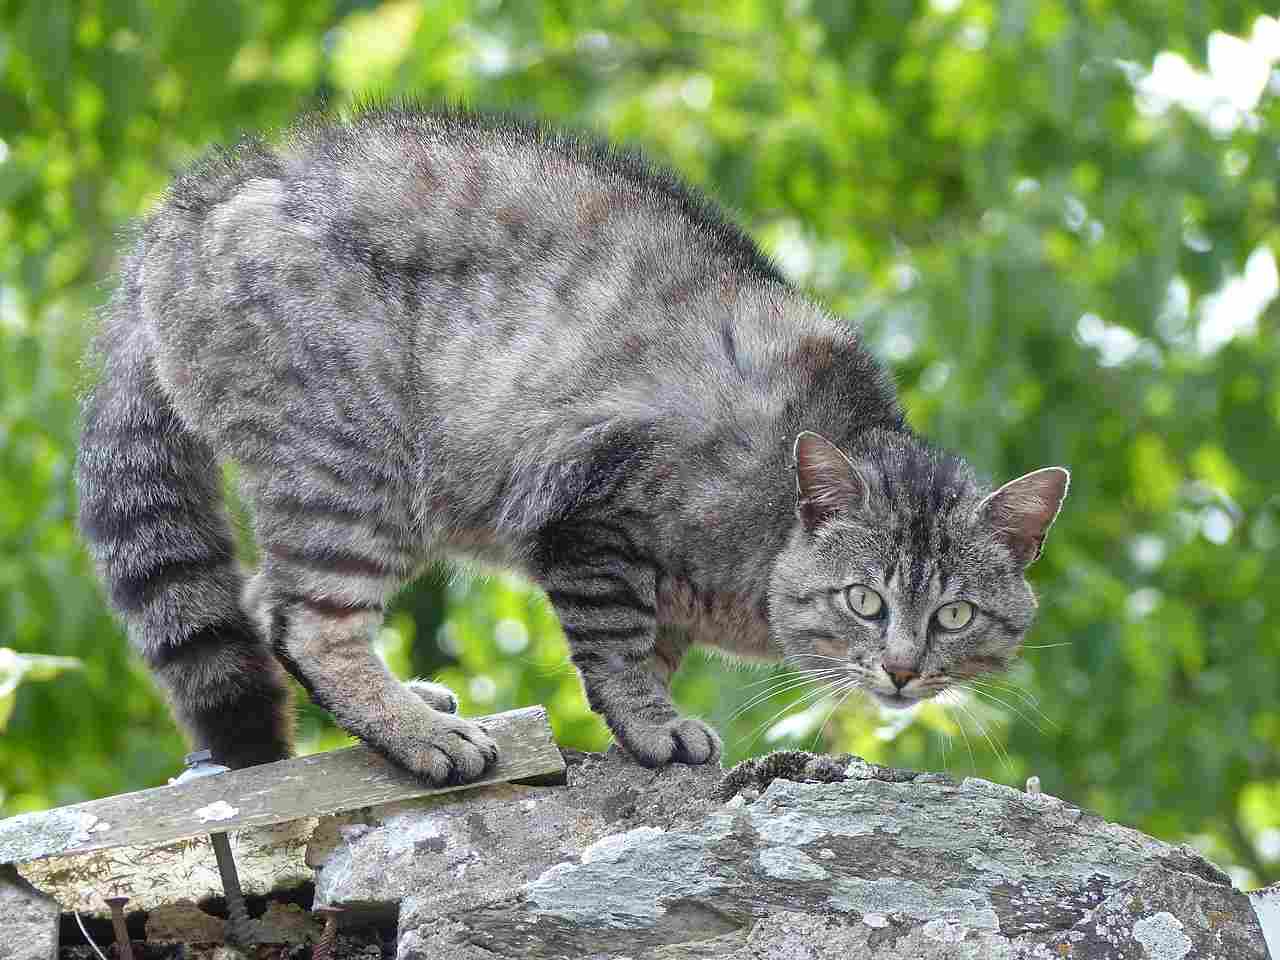 Wildcat Vs Domestic Cat: Superior Predatory Adaptations Place Wildcats Ahead of Domestic Cats (Credit: Tsaag Valren 2019 .CC BY-SA 4.0.)